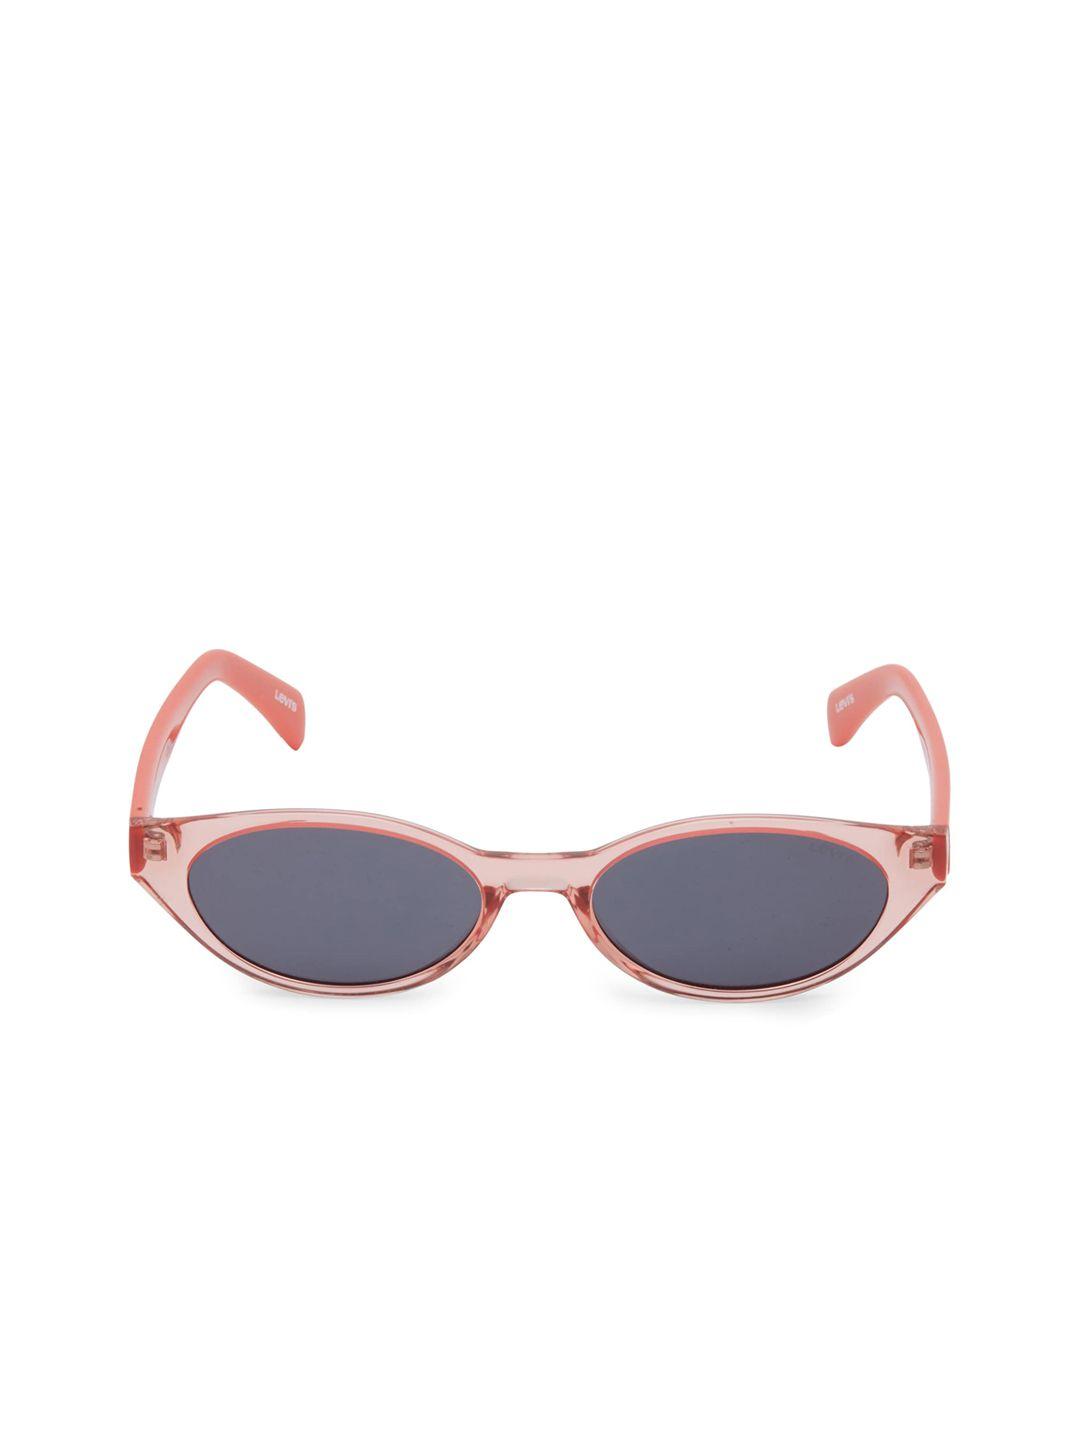 levis-women-grey-cateye-uv-protected-sunglasses-lv-1003/s-35j-54ir